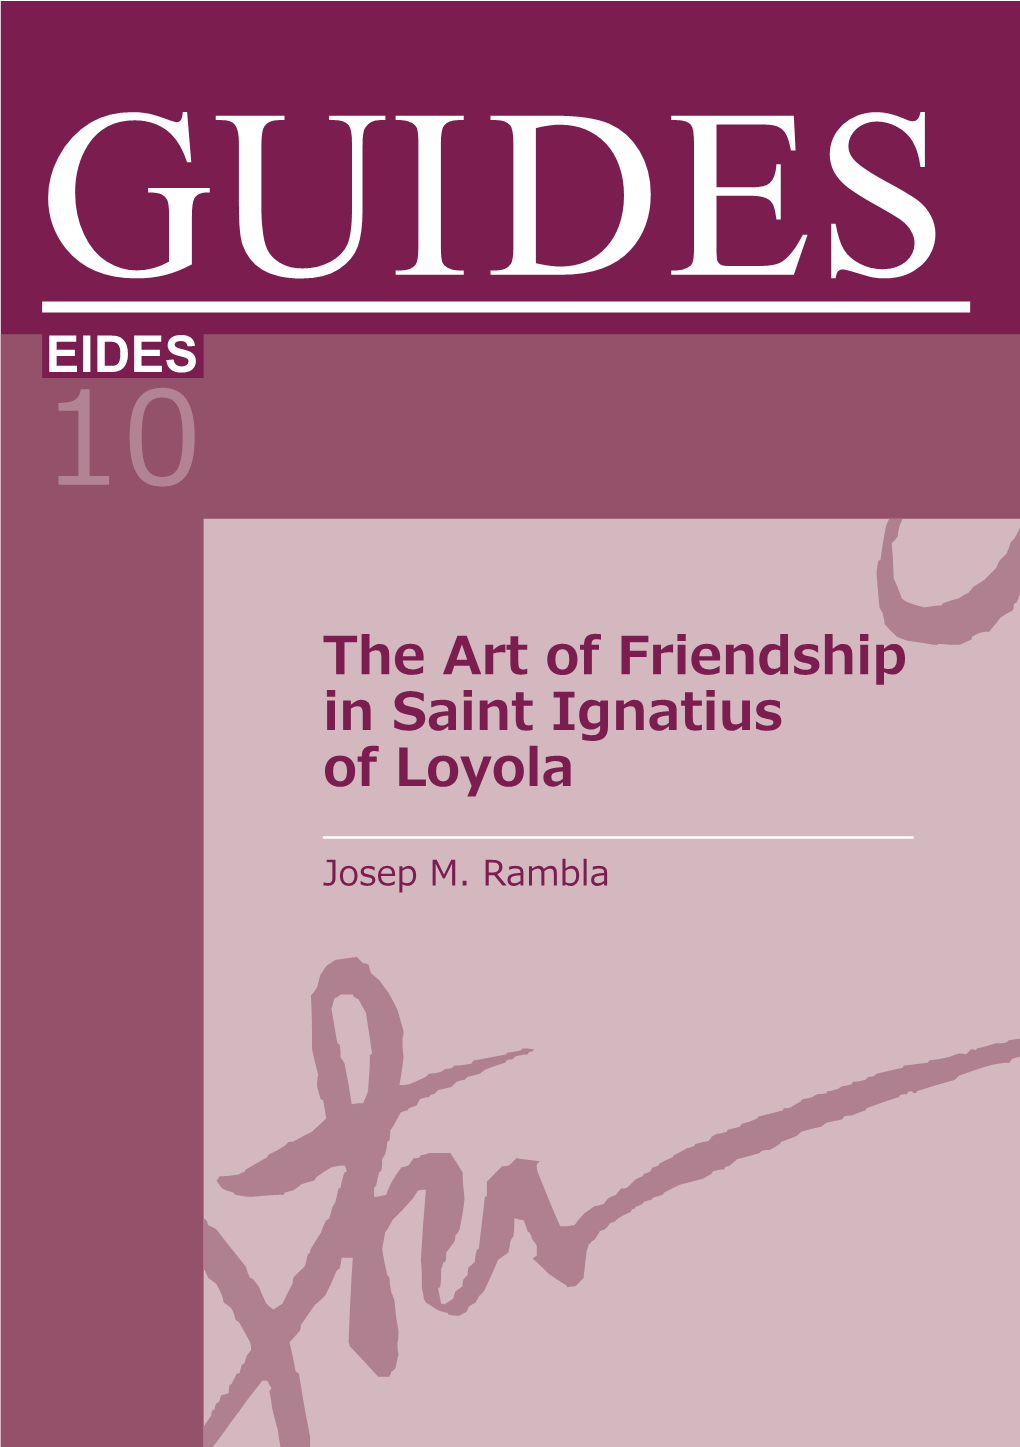 The Art of Friendship in Saint Ignatius of Loyola